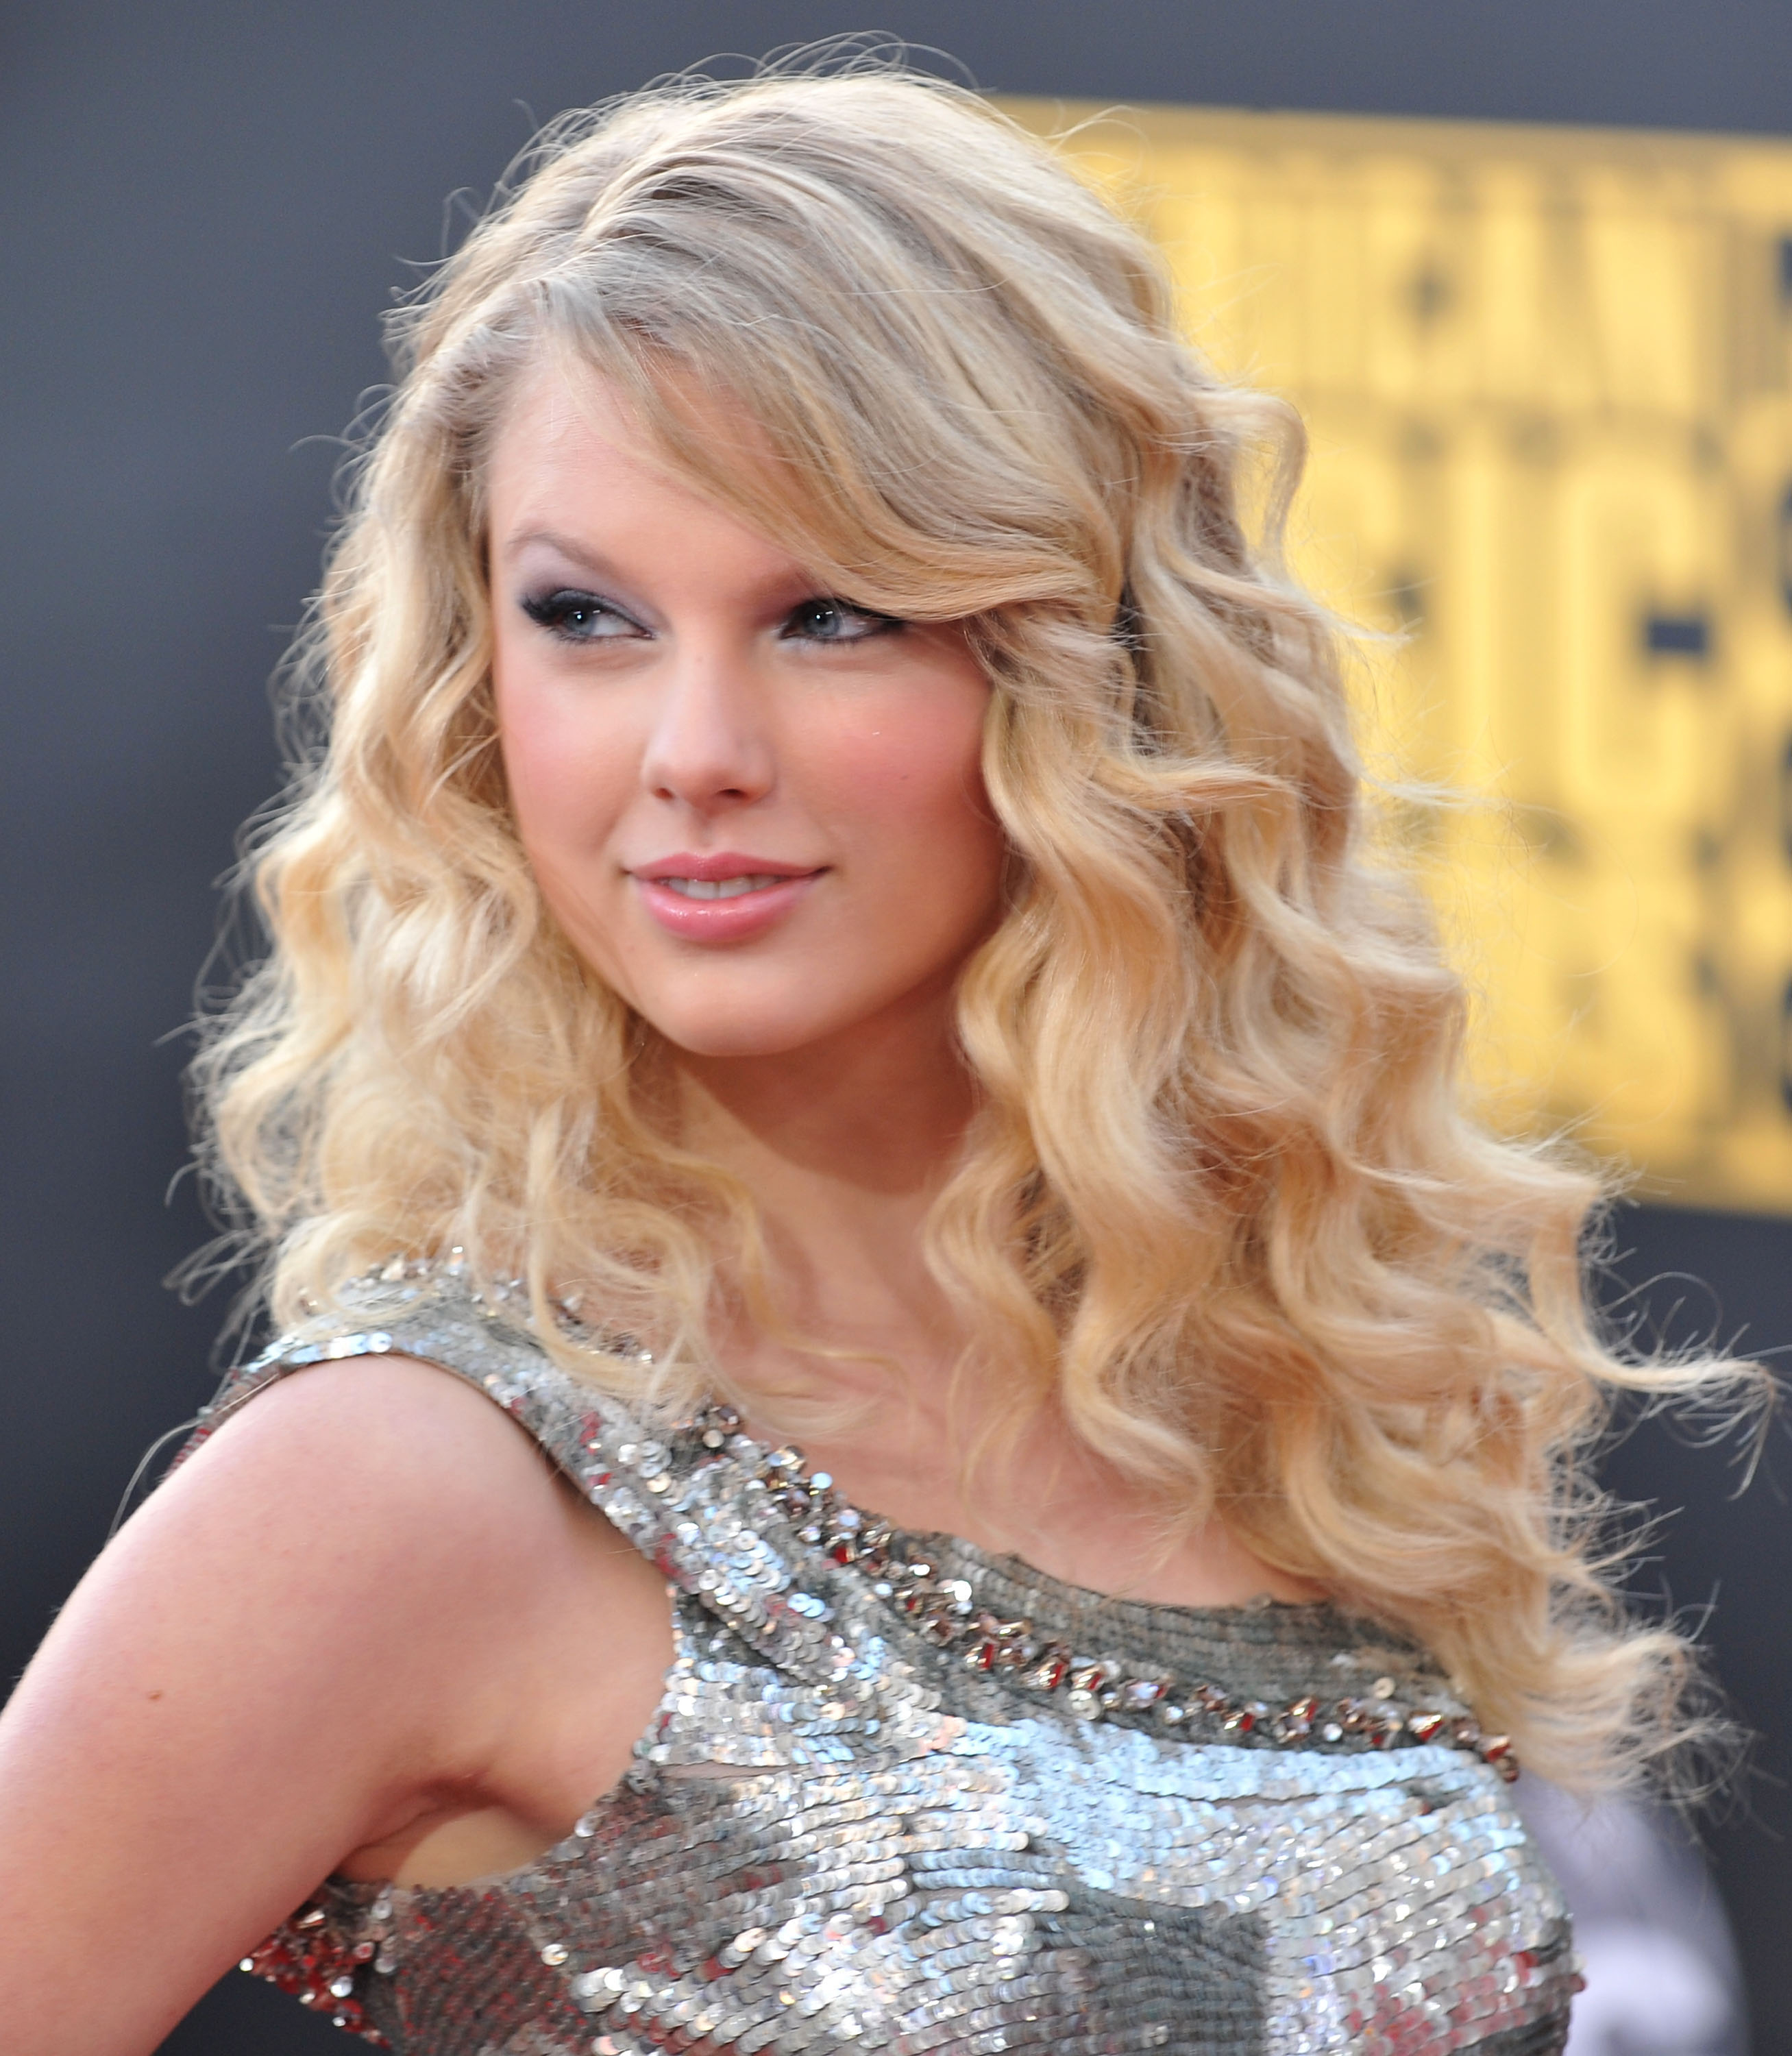 Close-up of Taylor